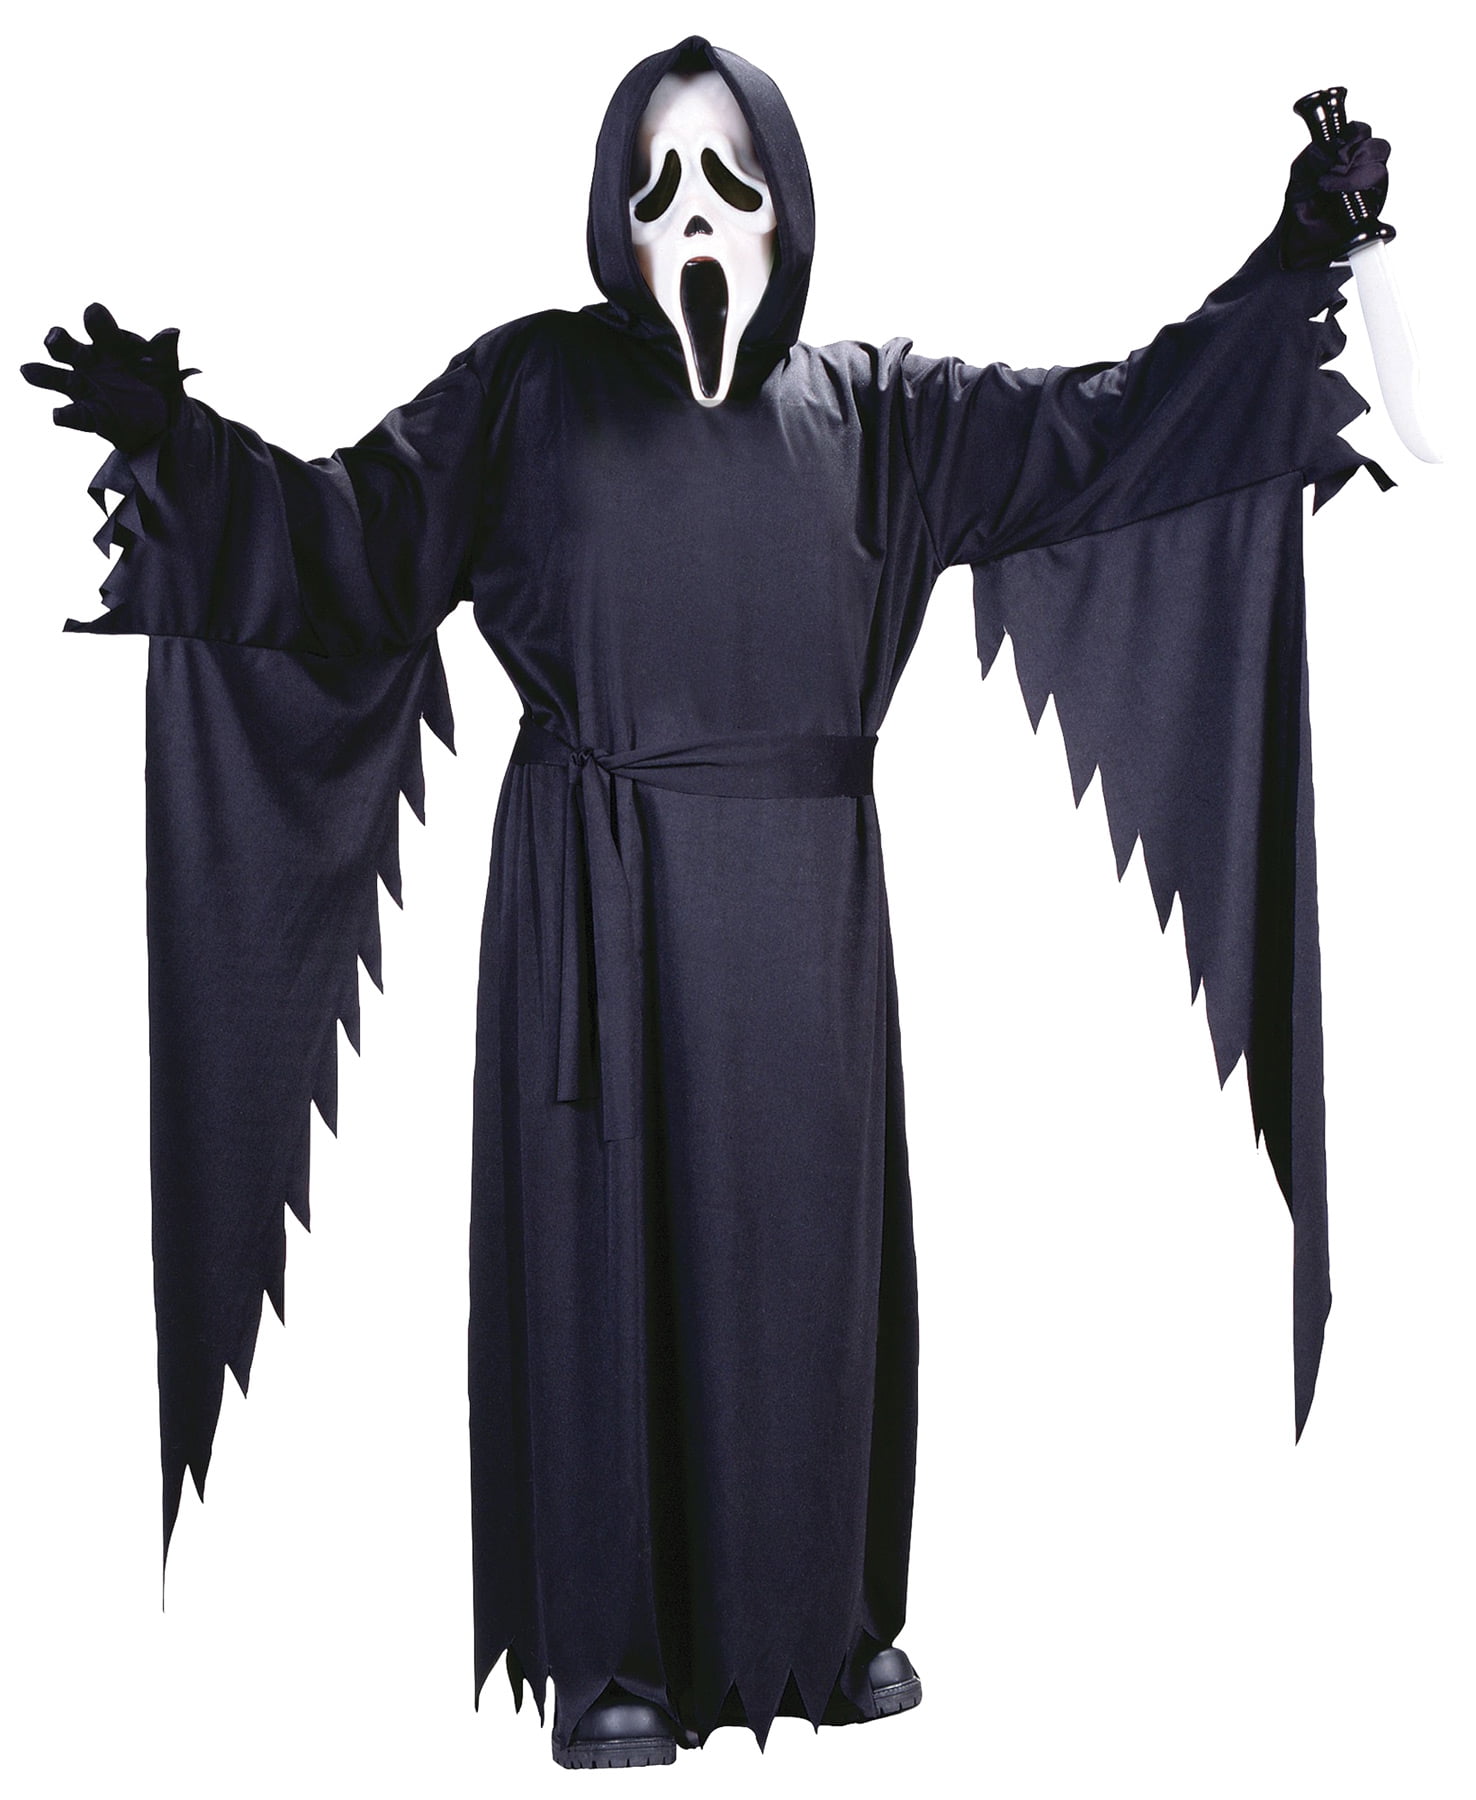 Men's Women's White Unisex Ghost Fancy Dress Costume Halloween Horror Scream Fun 